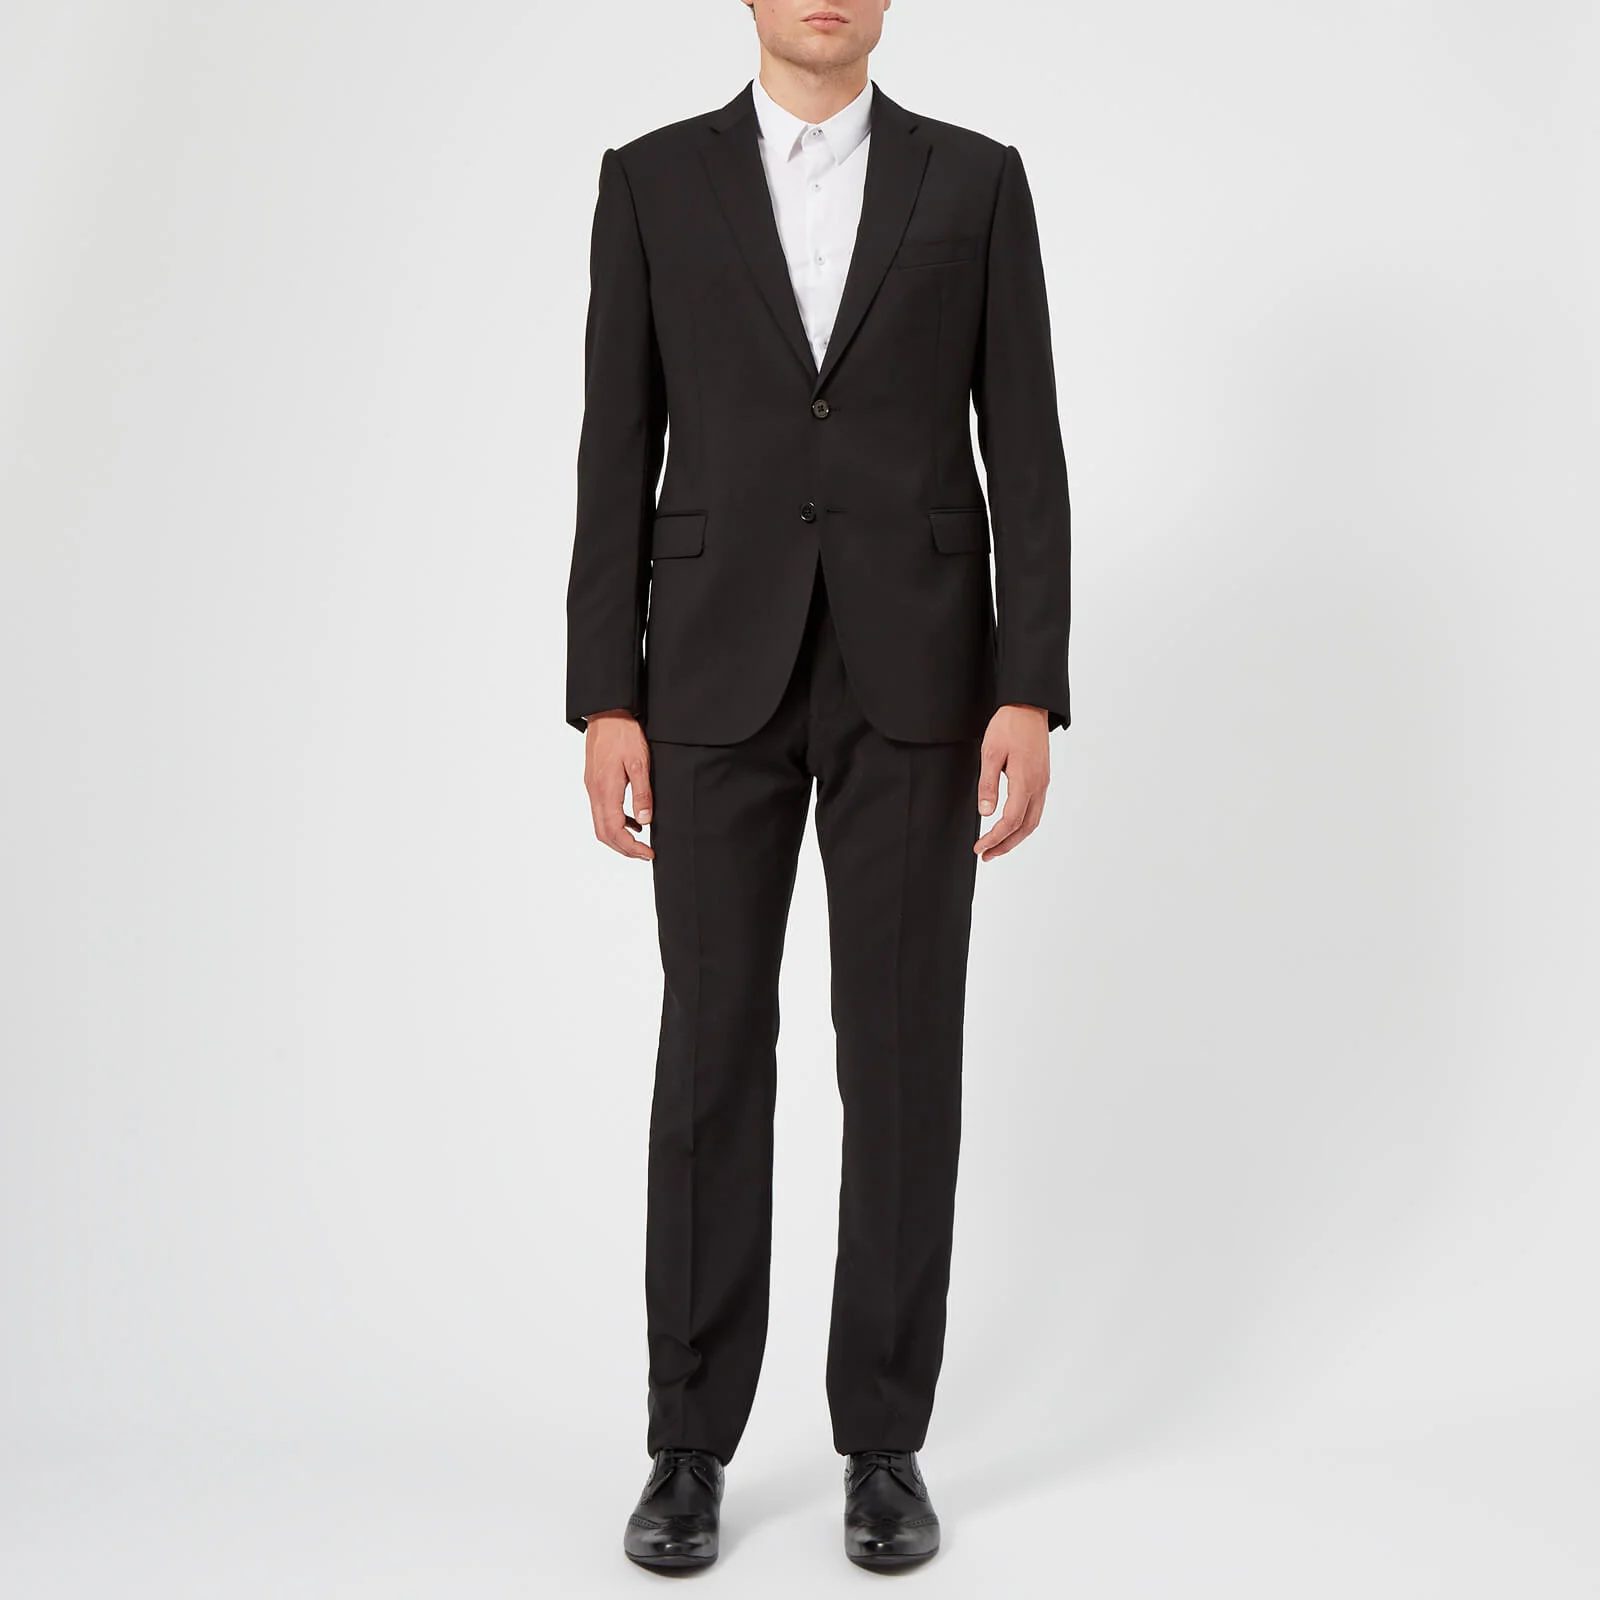 Emporio Armani Men's M Line Single Breasted Suit - Nero Image 1